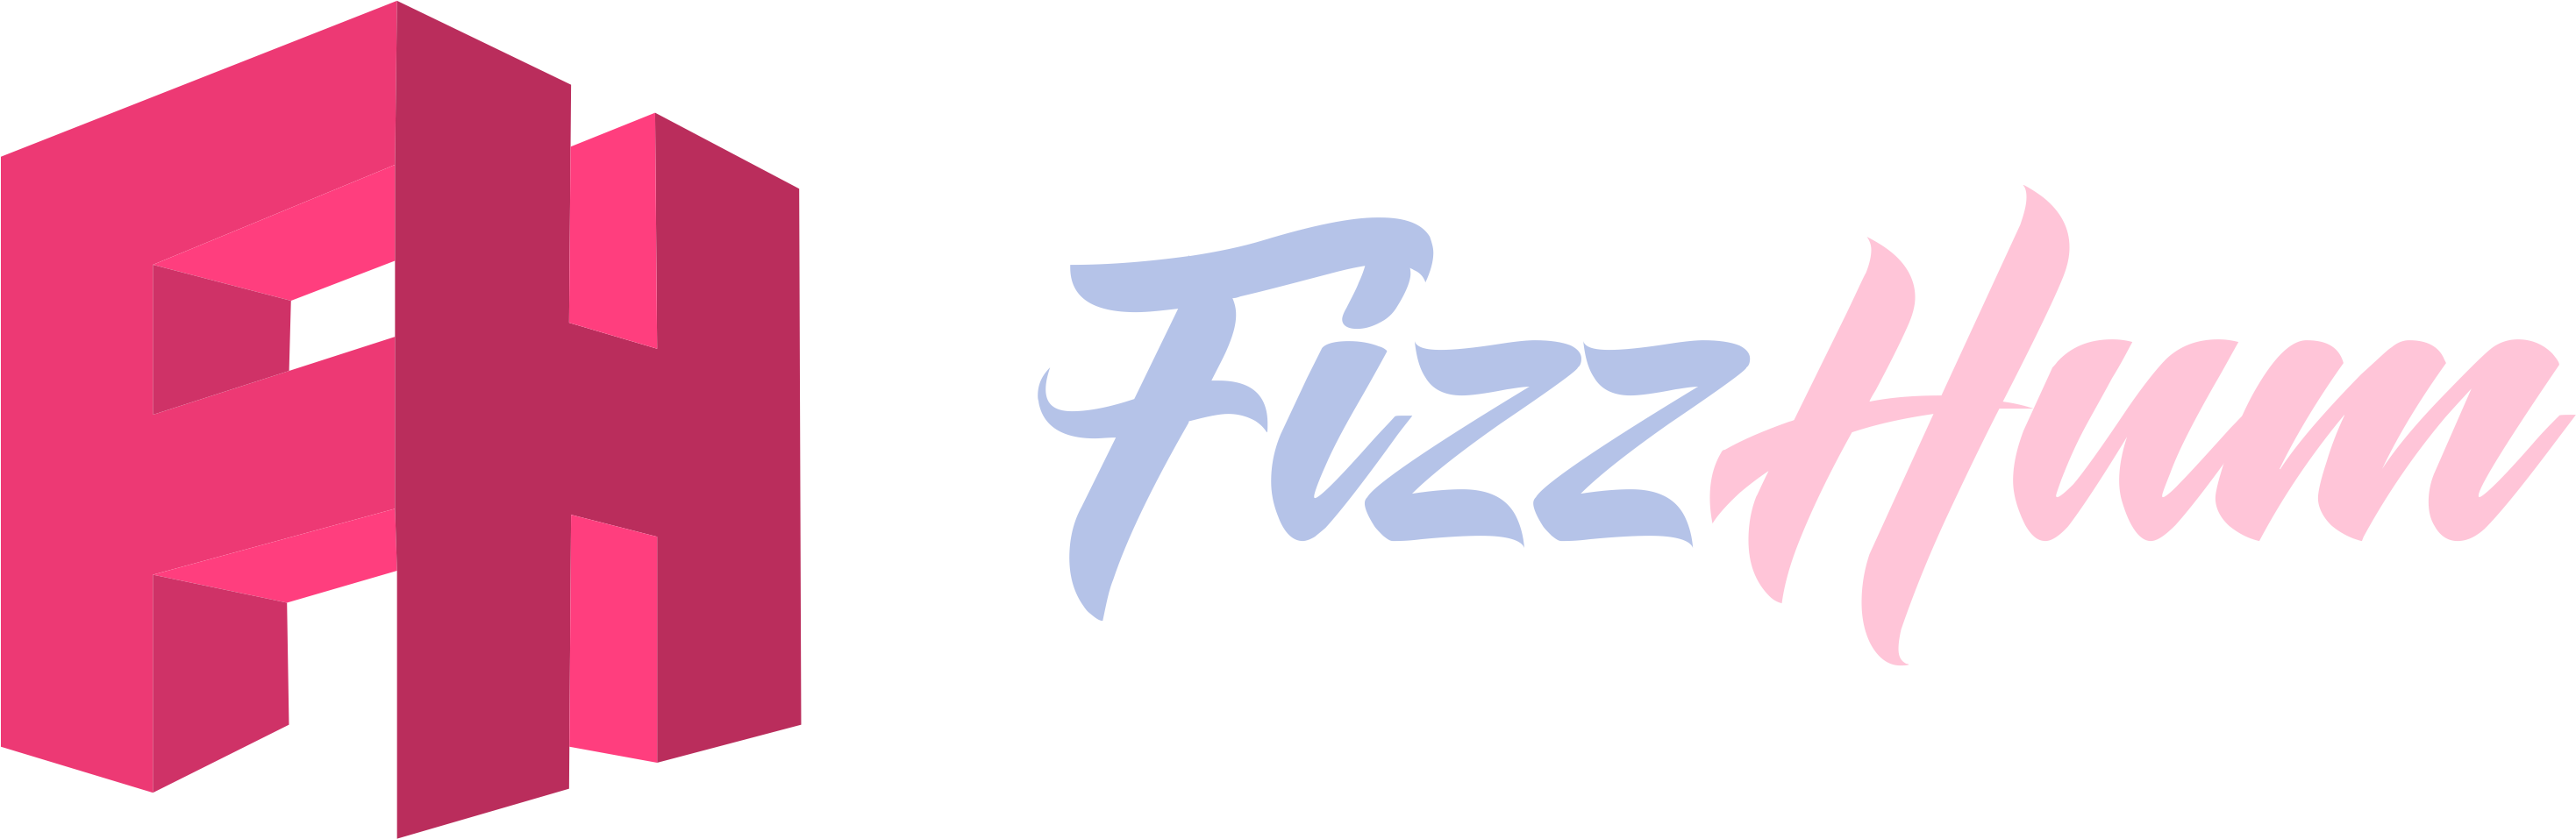 fizzhum footer logo